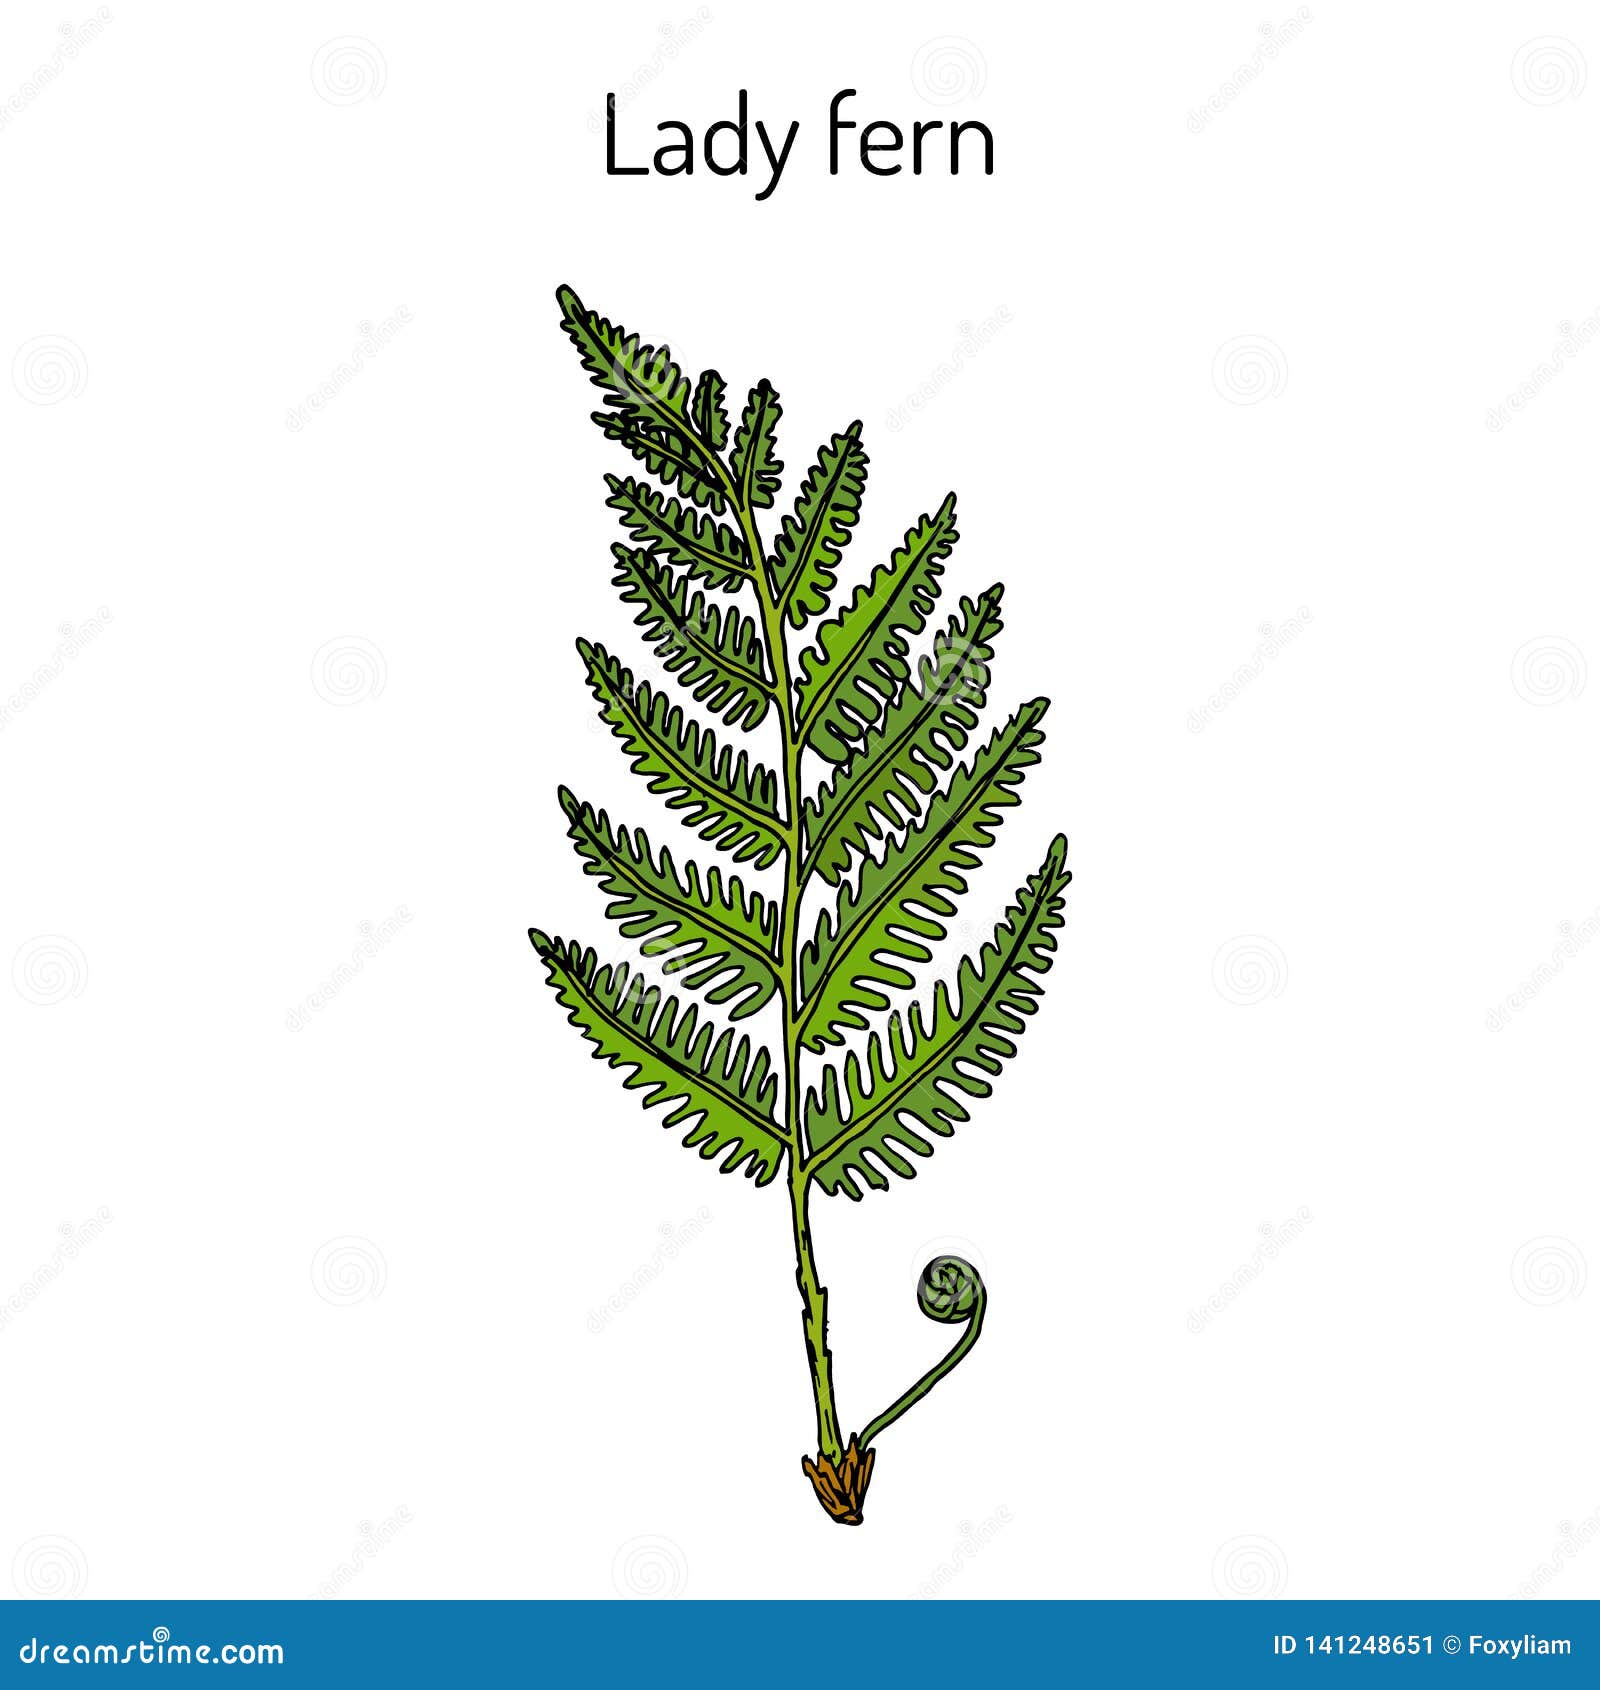 ommon lady-fern, medicinal plant